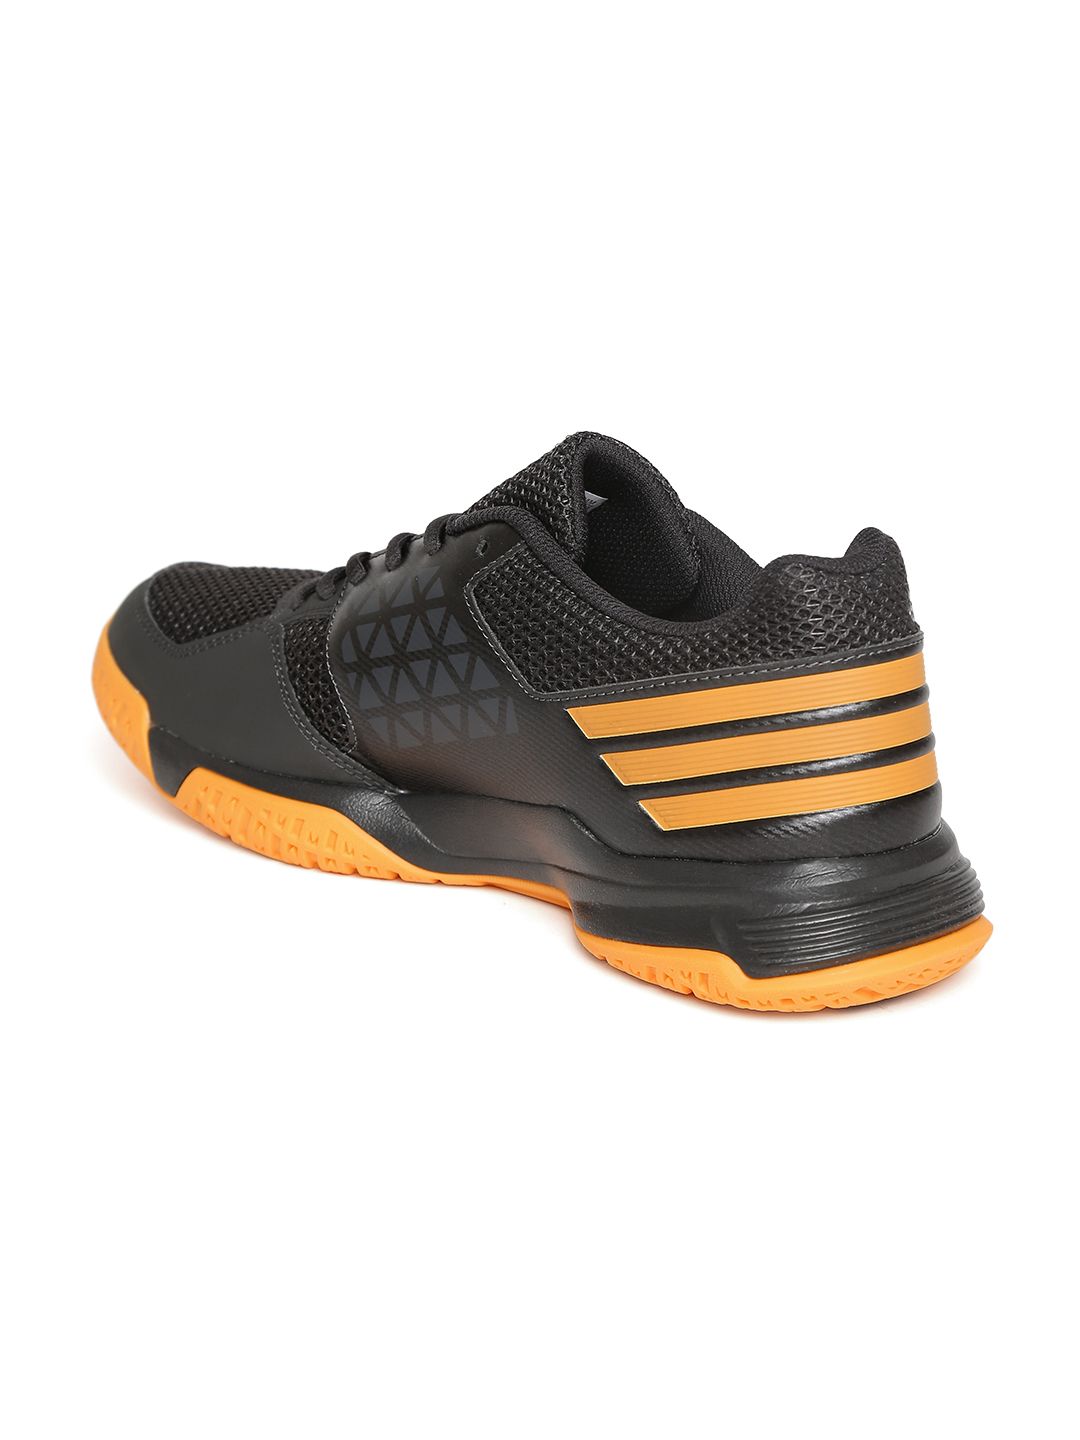 adidas badminton shoes